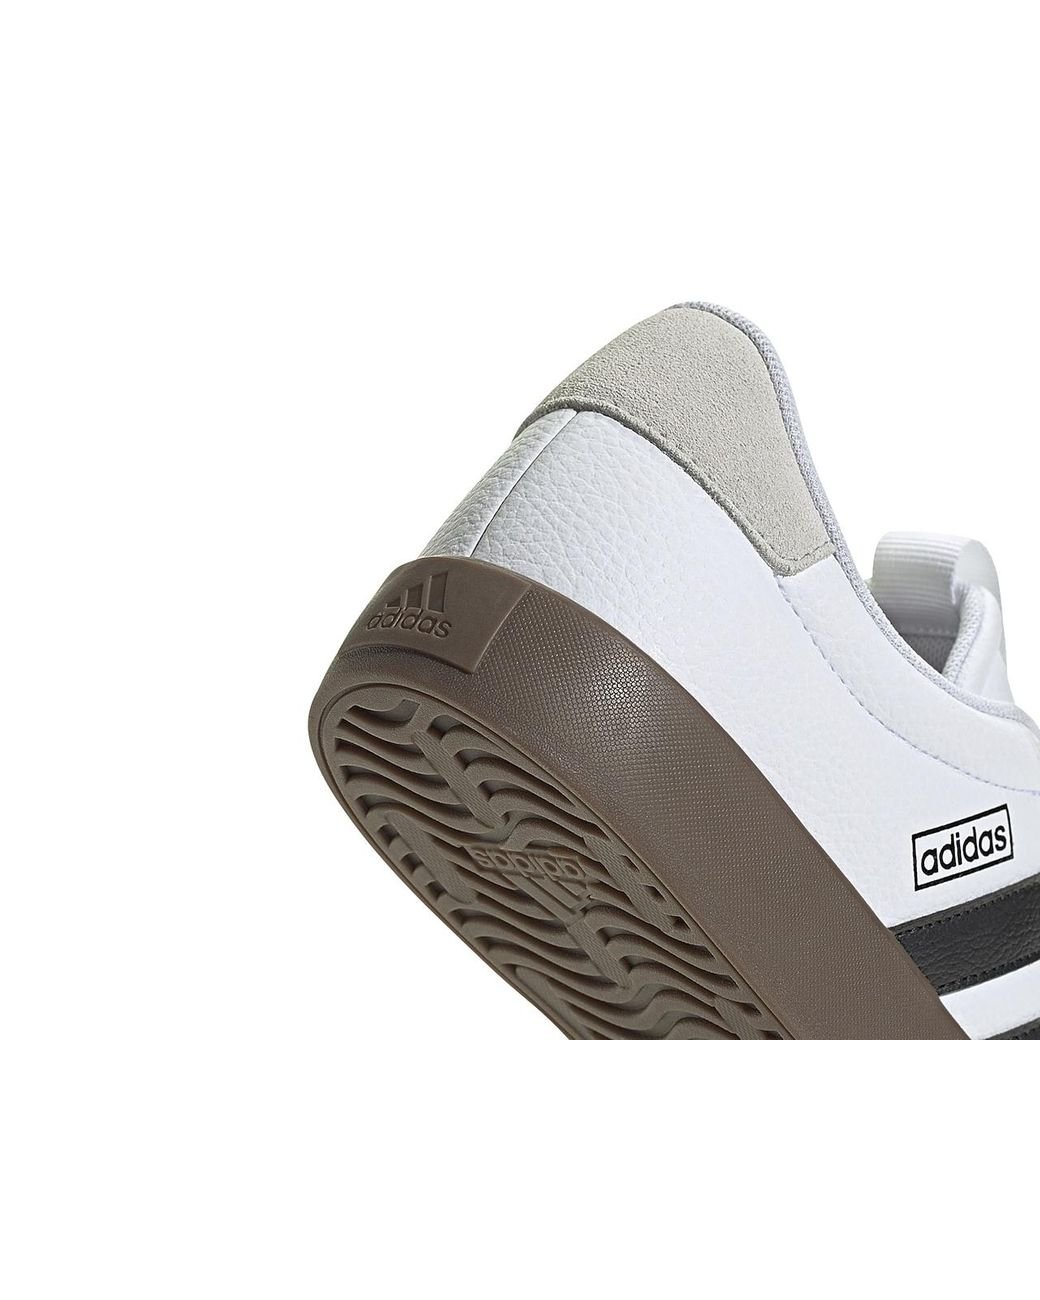 Adidas VL Court 3.0 'Pink White' ID6281 - KICKS CREW